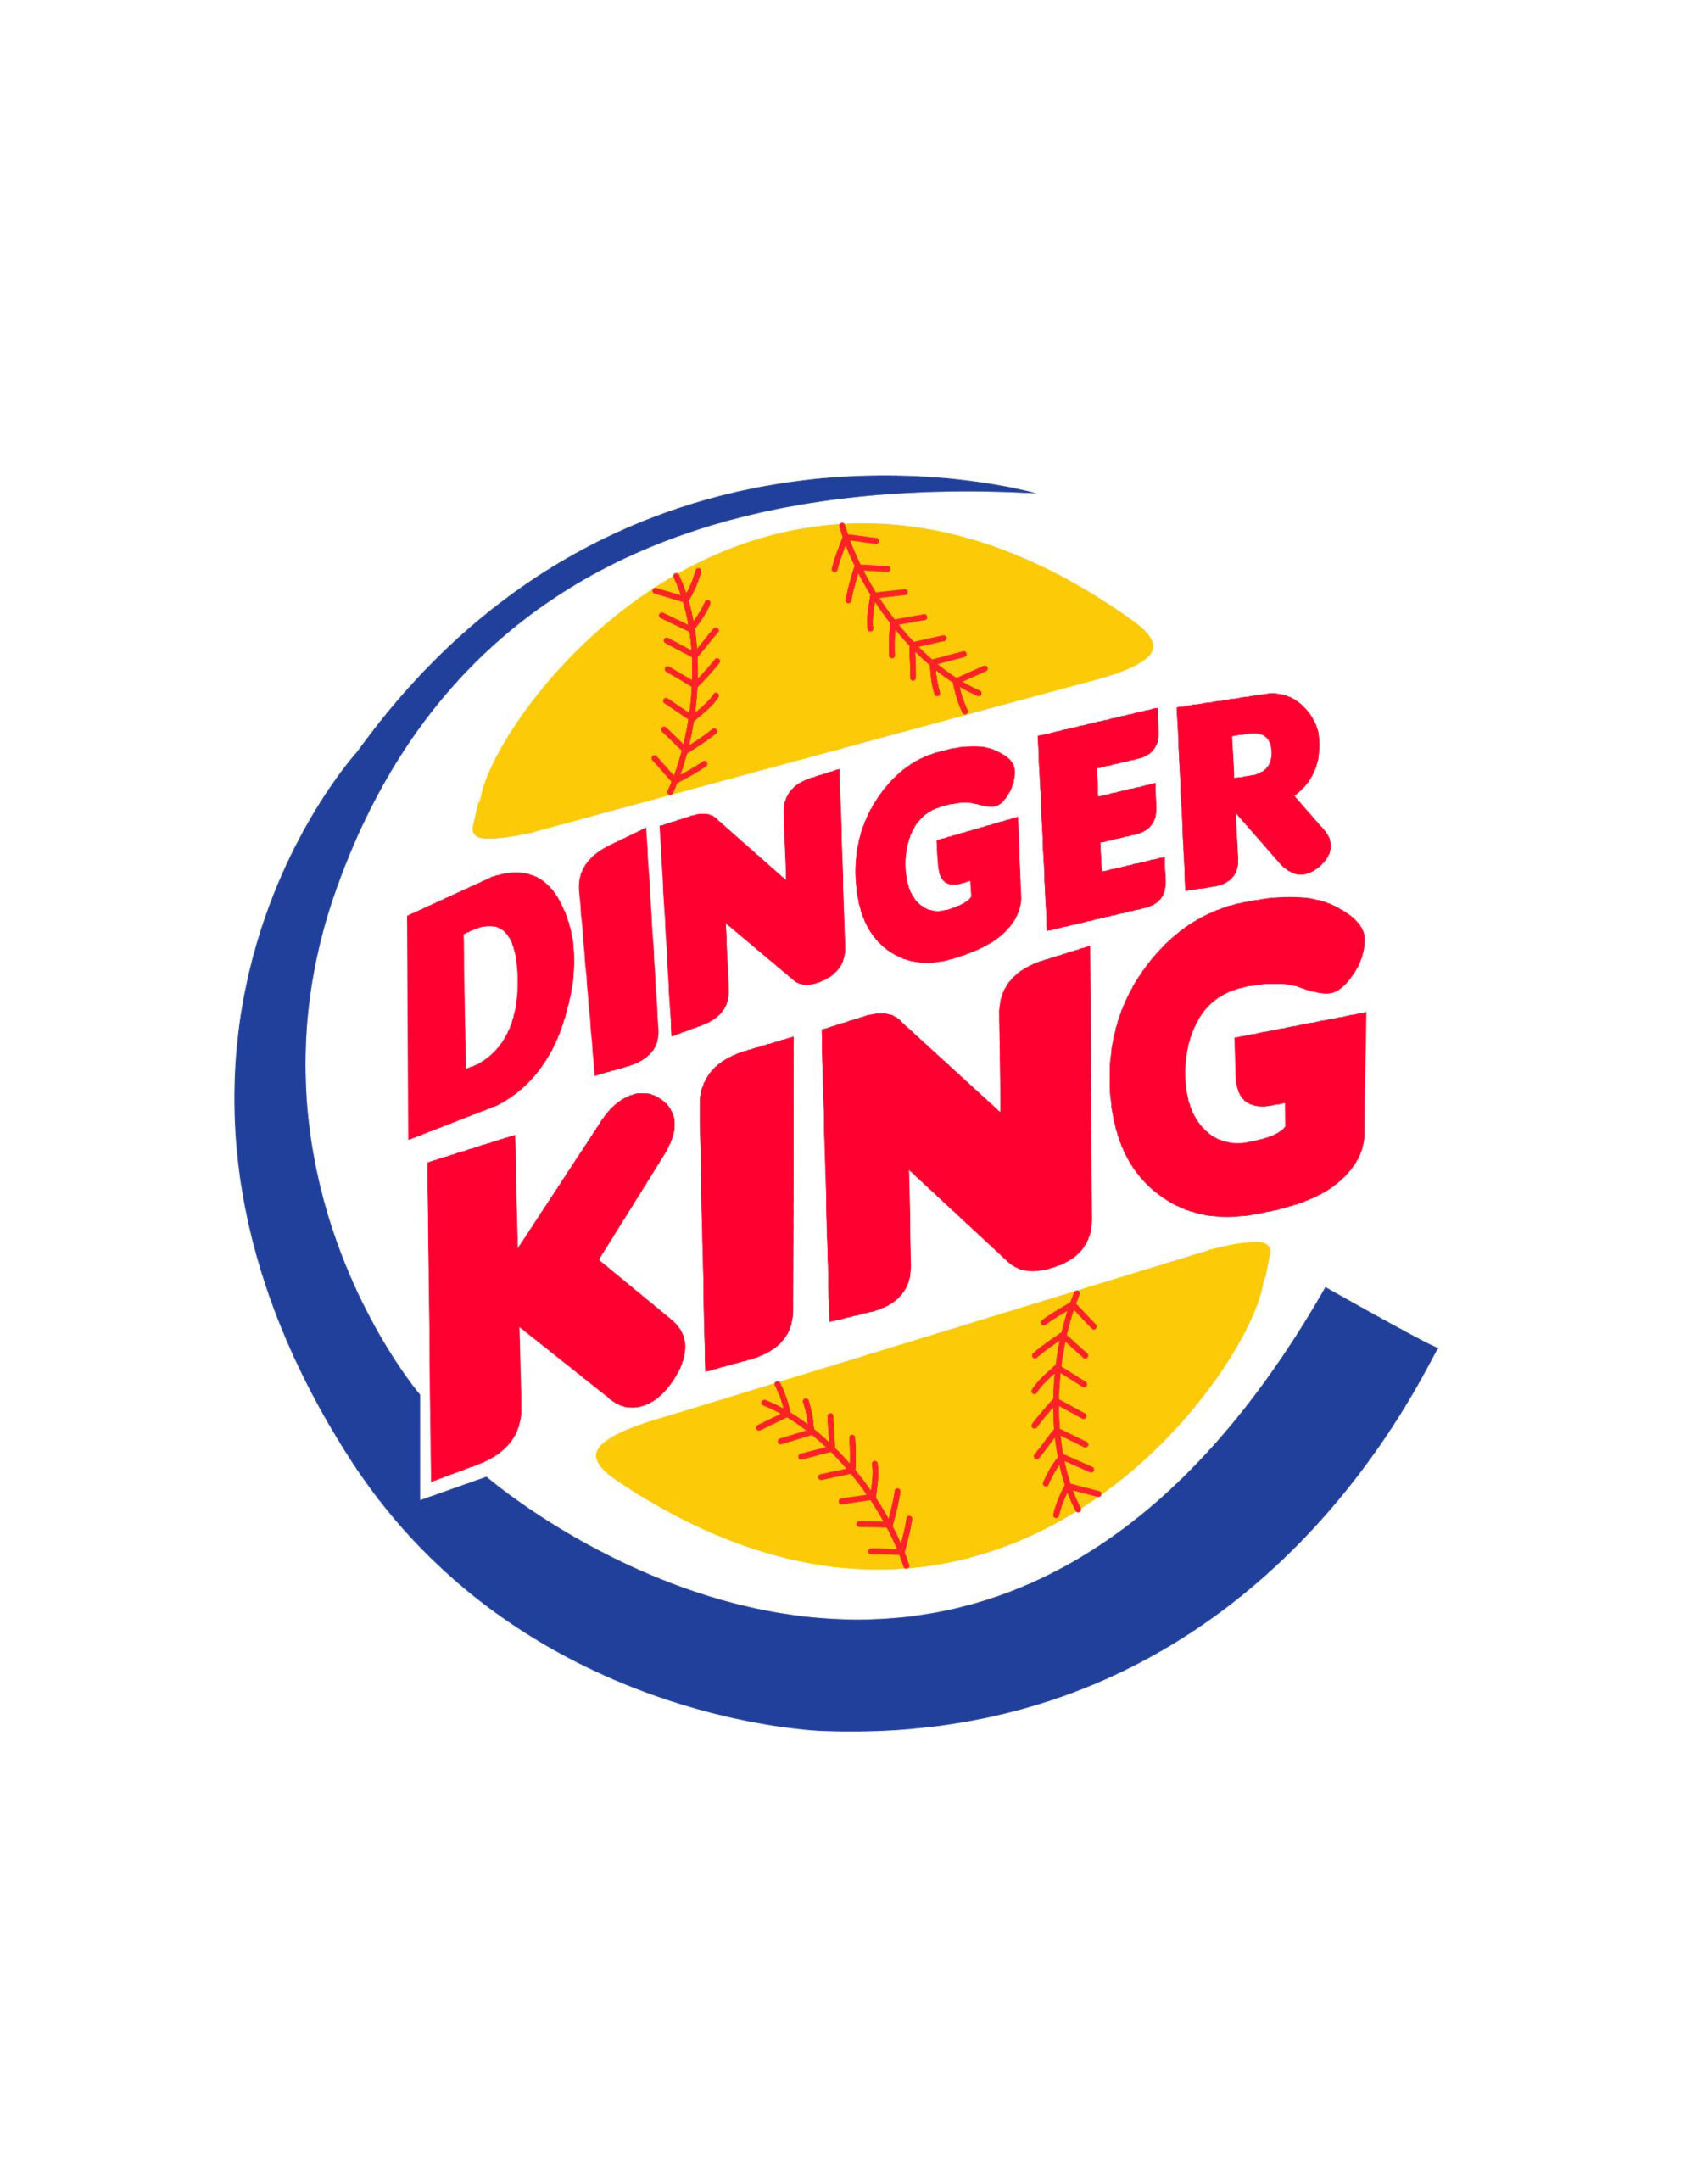 Dinger King Graphic Art Logo Image